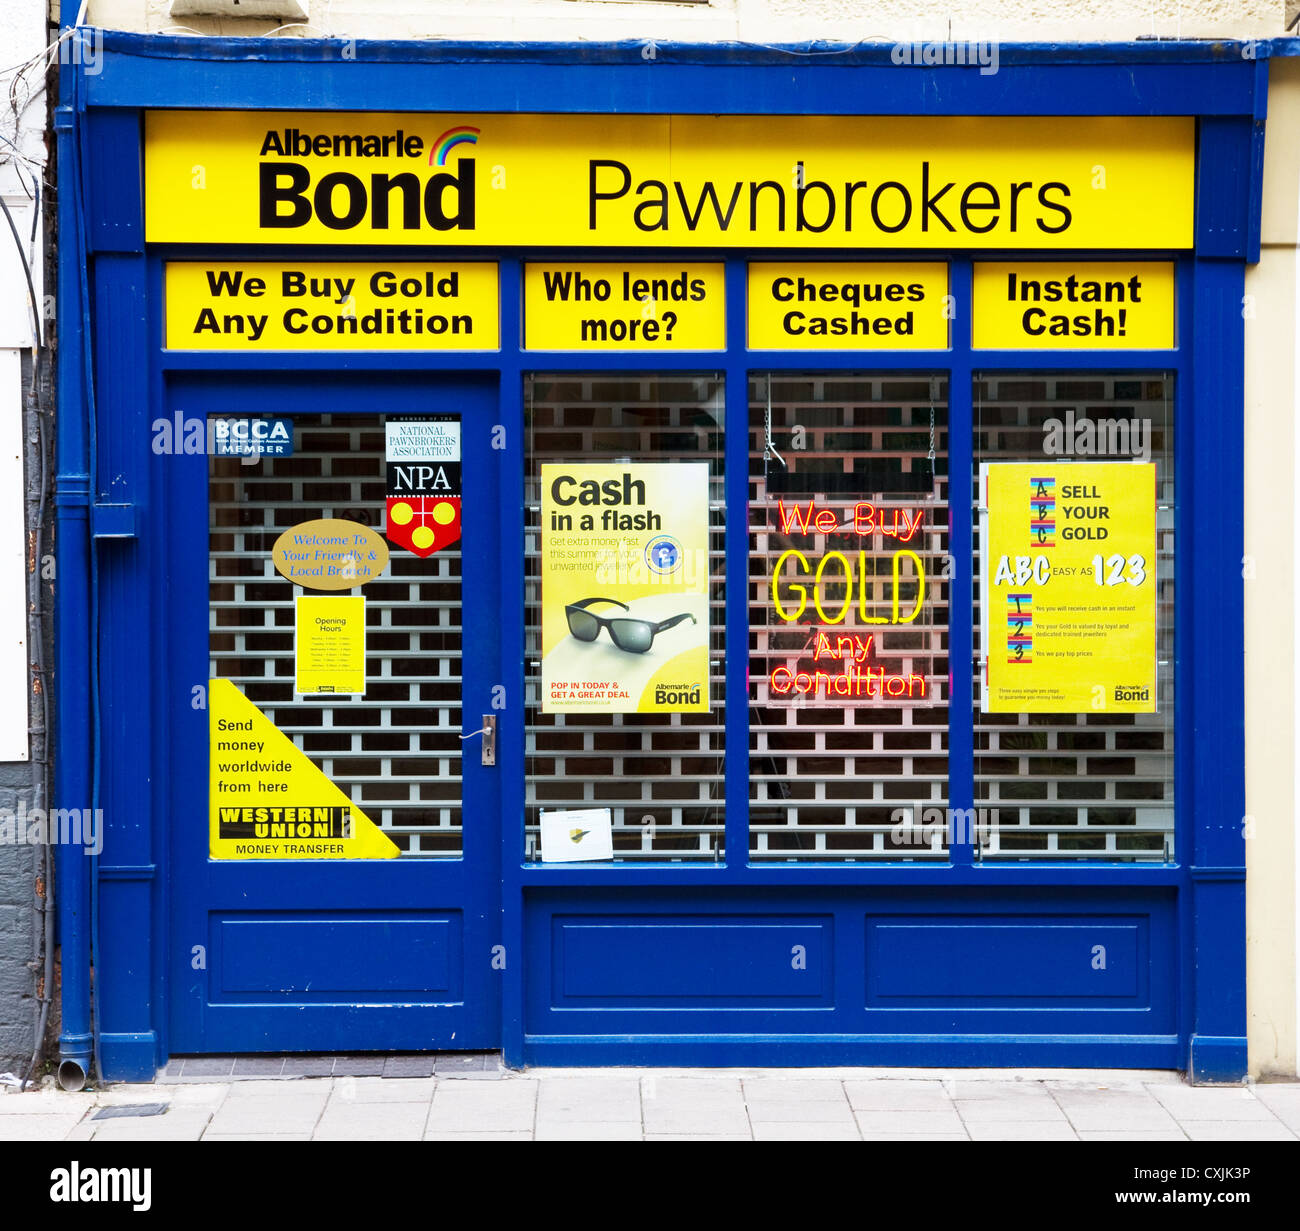 Albemarle Bond, Pawnbrokers, Chester, England, UK Stock Photo